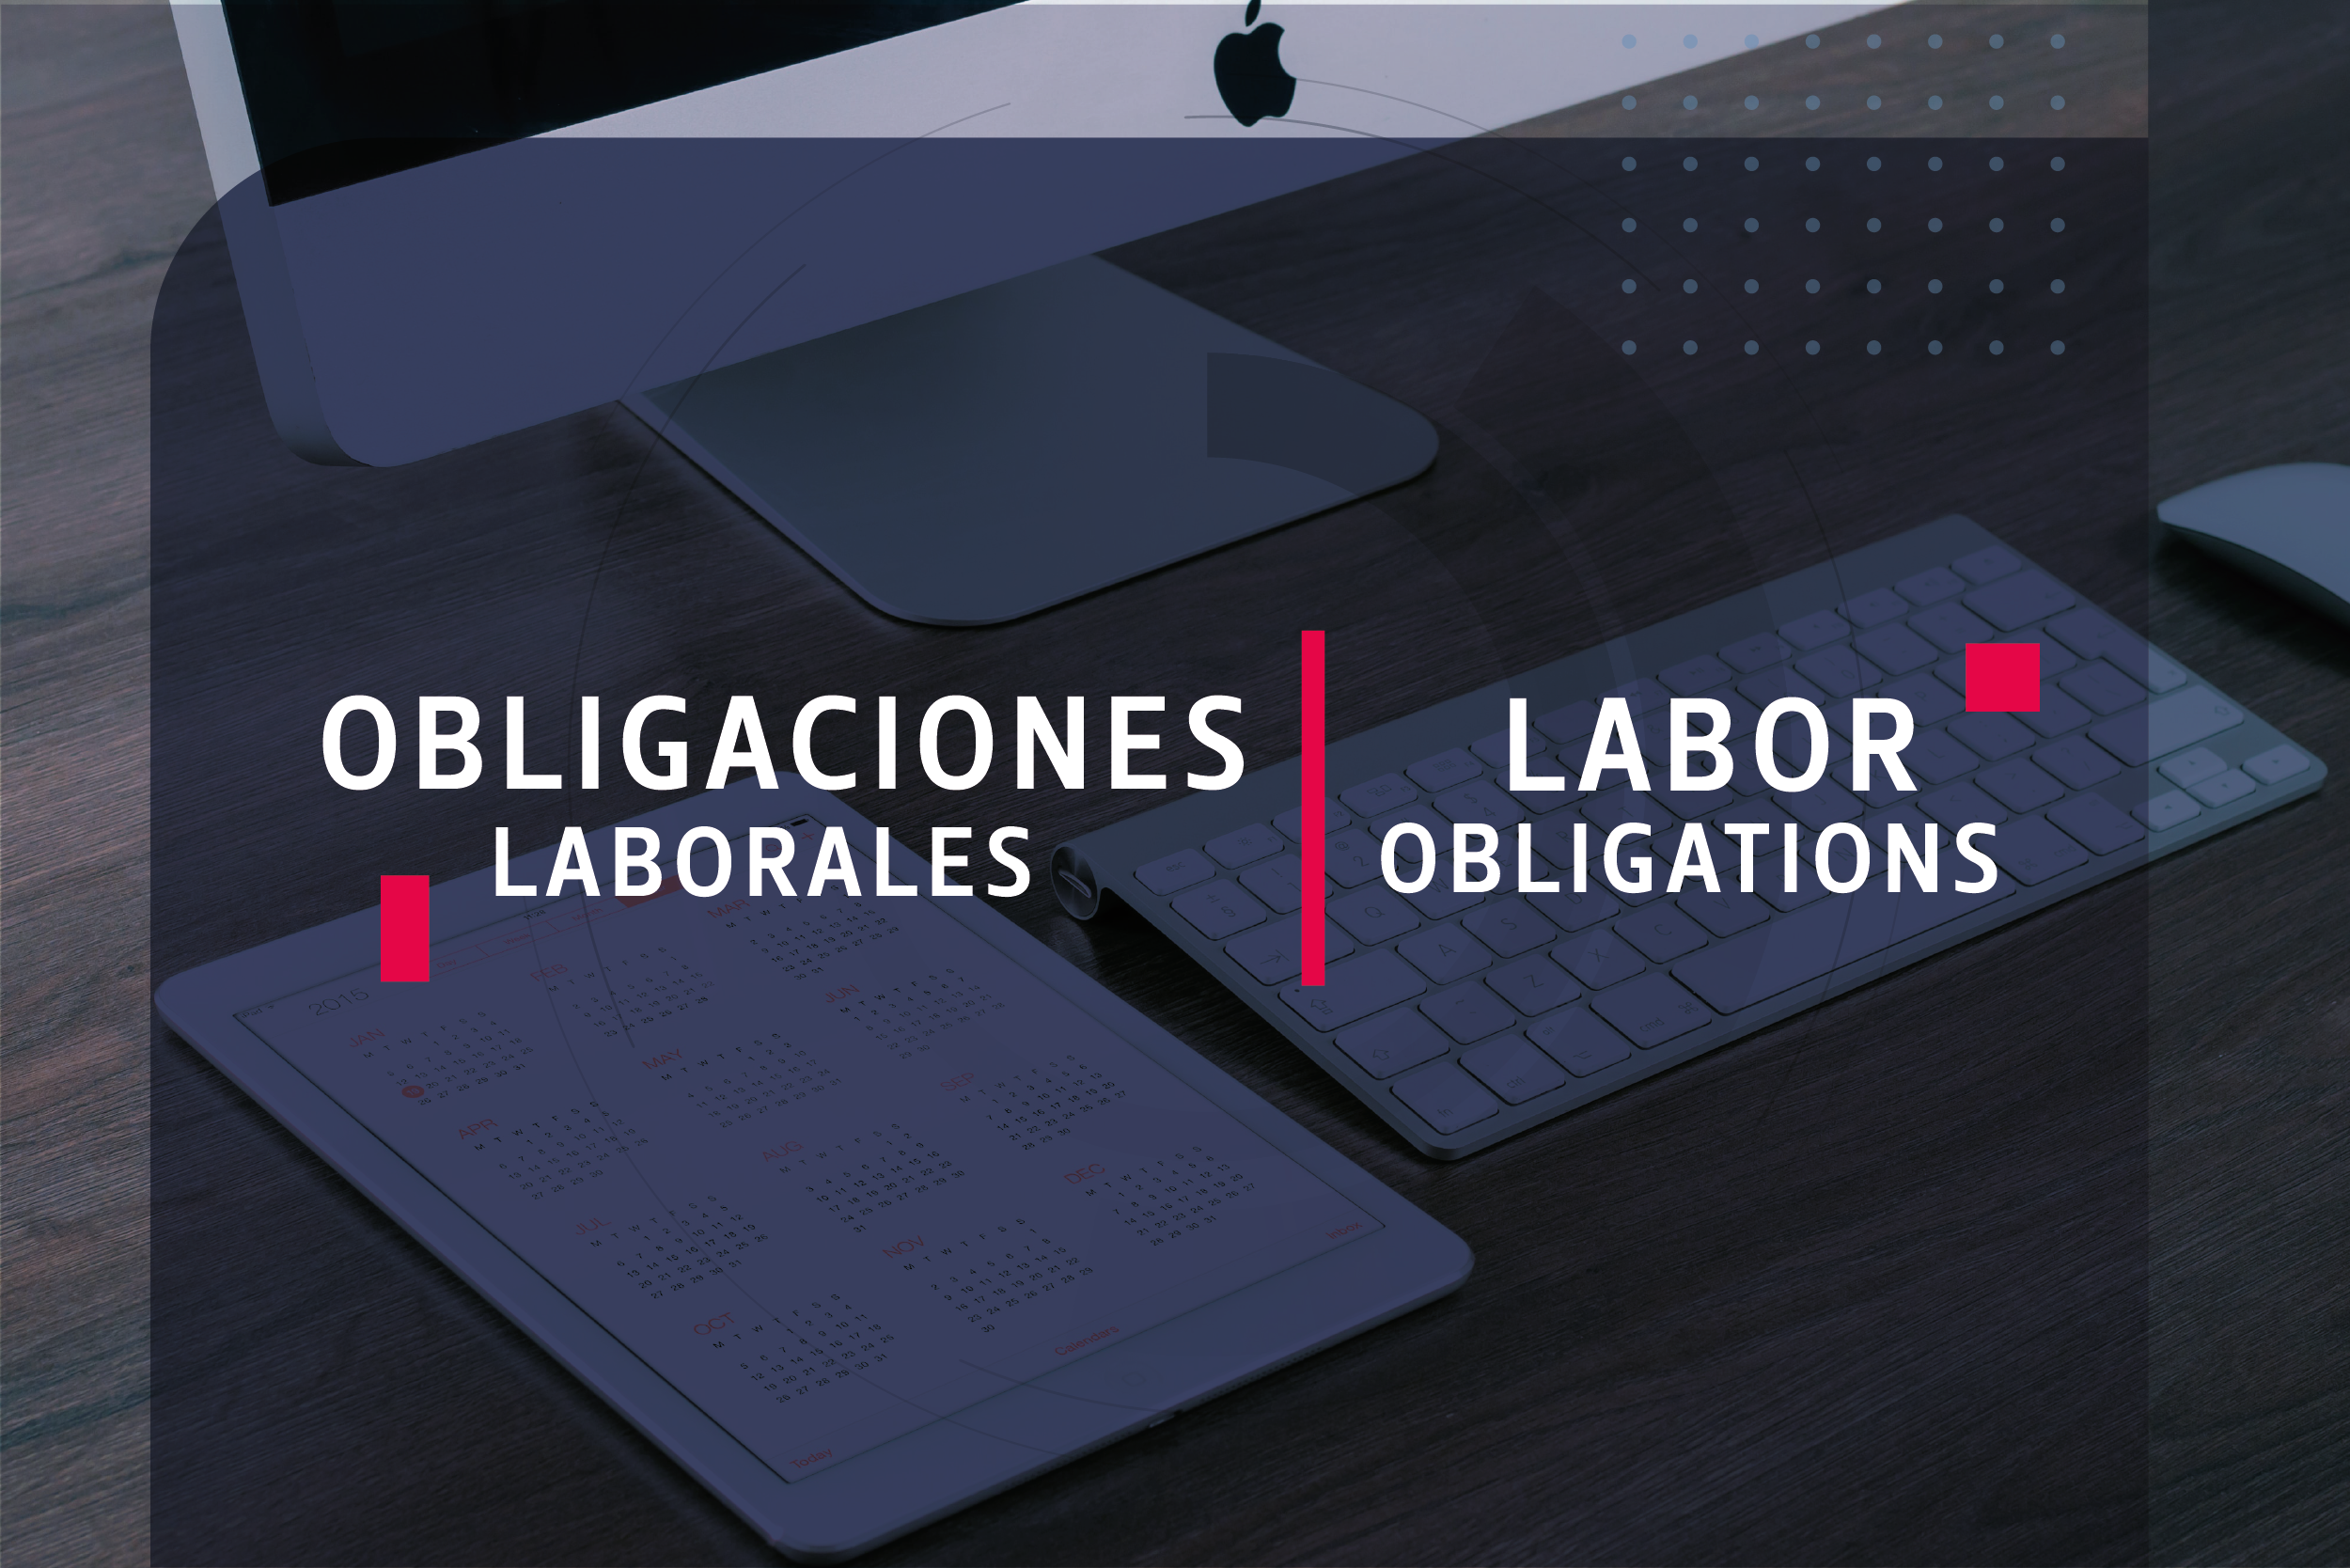 Labor Obligations